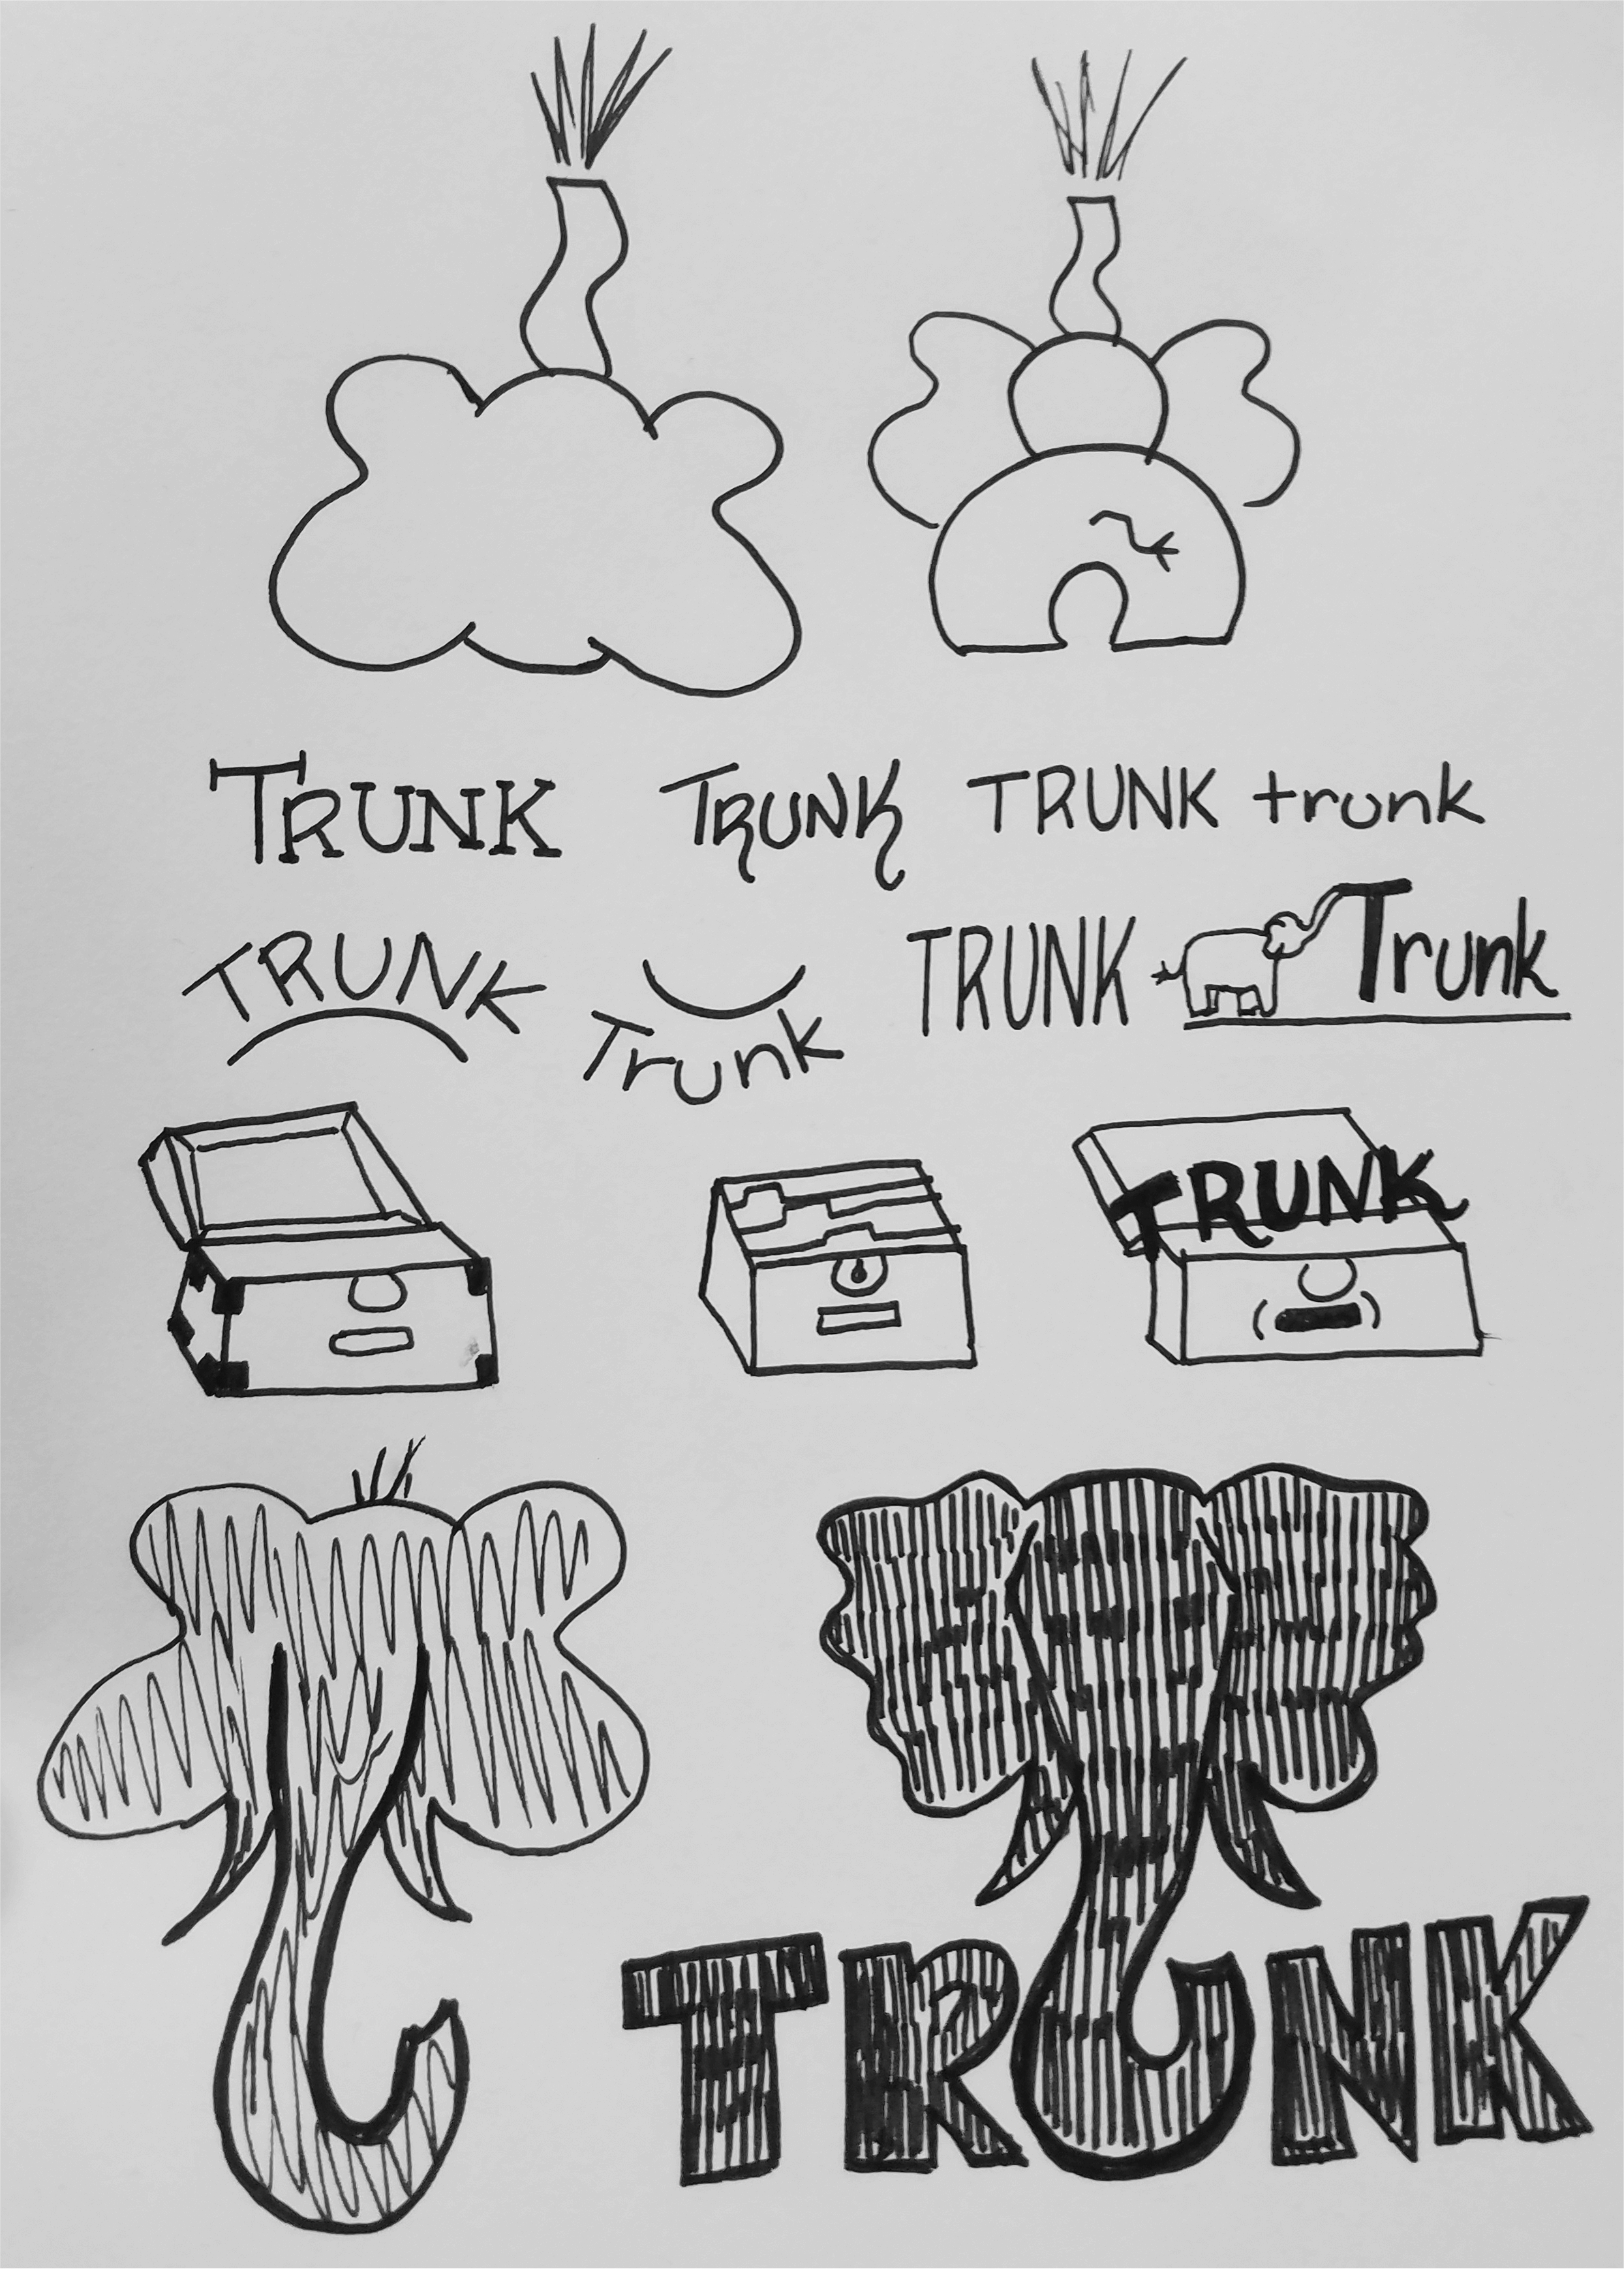 original trunk sketches